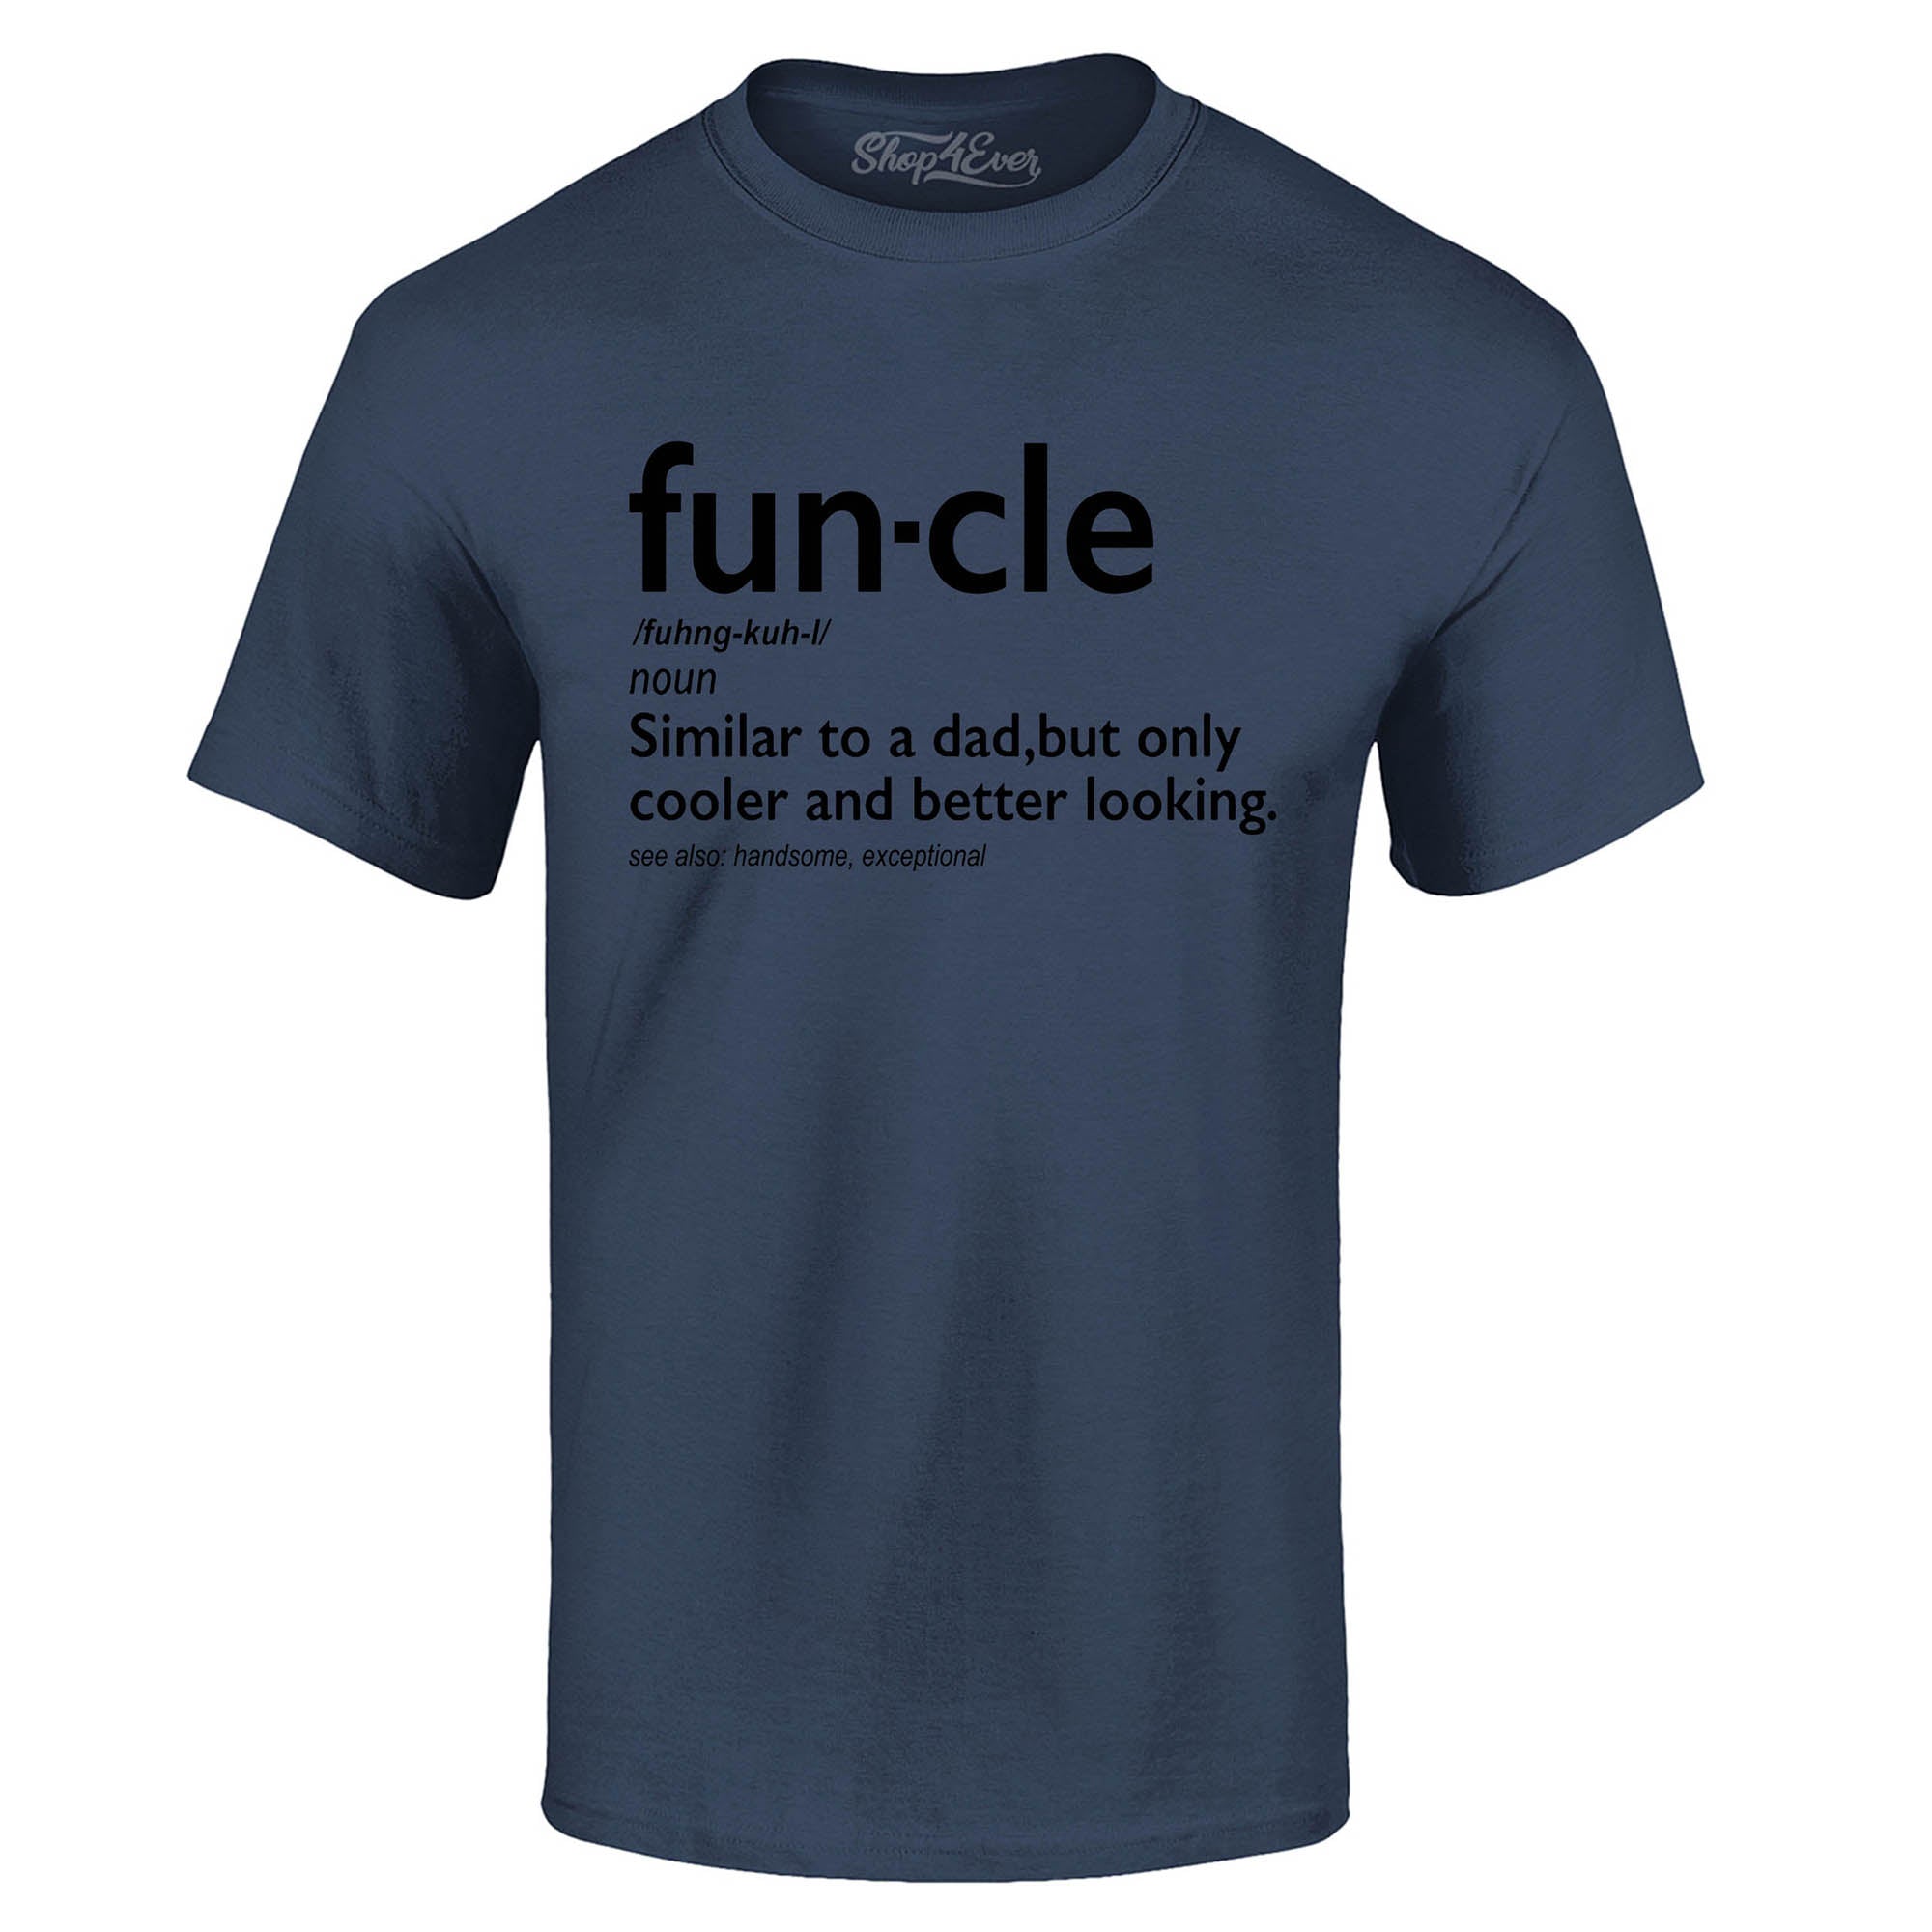 Fun-cle T-Shirt Uncle Shirts